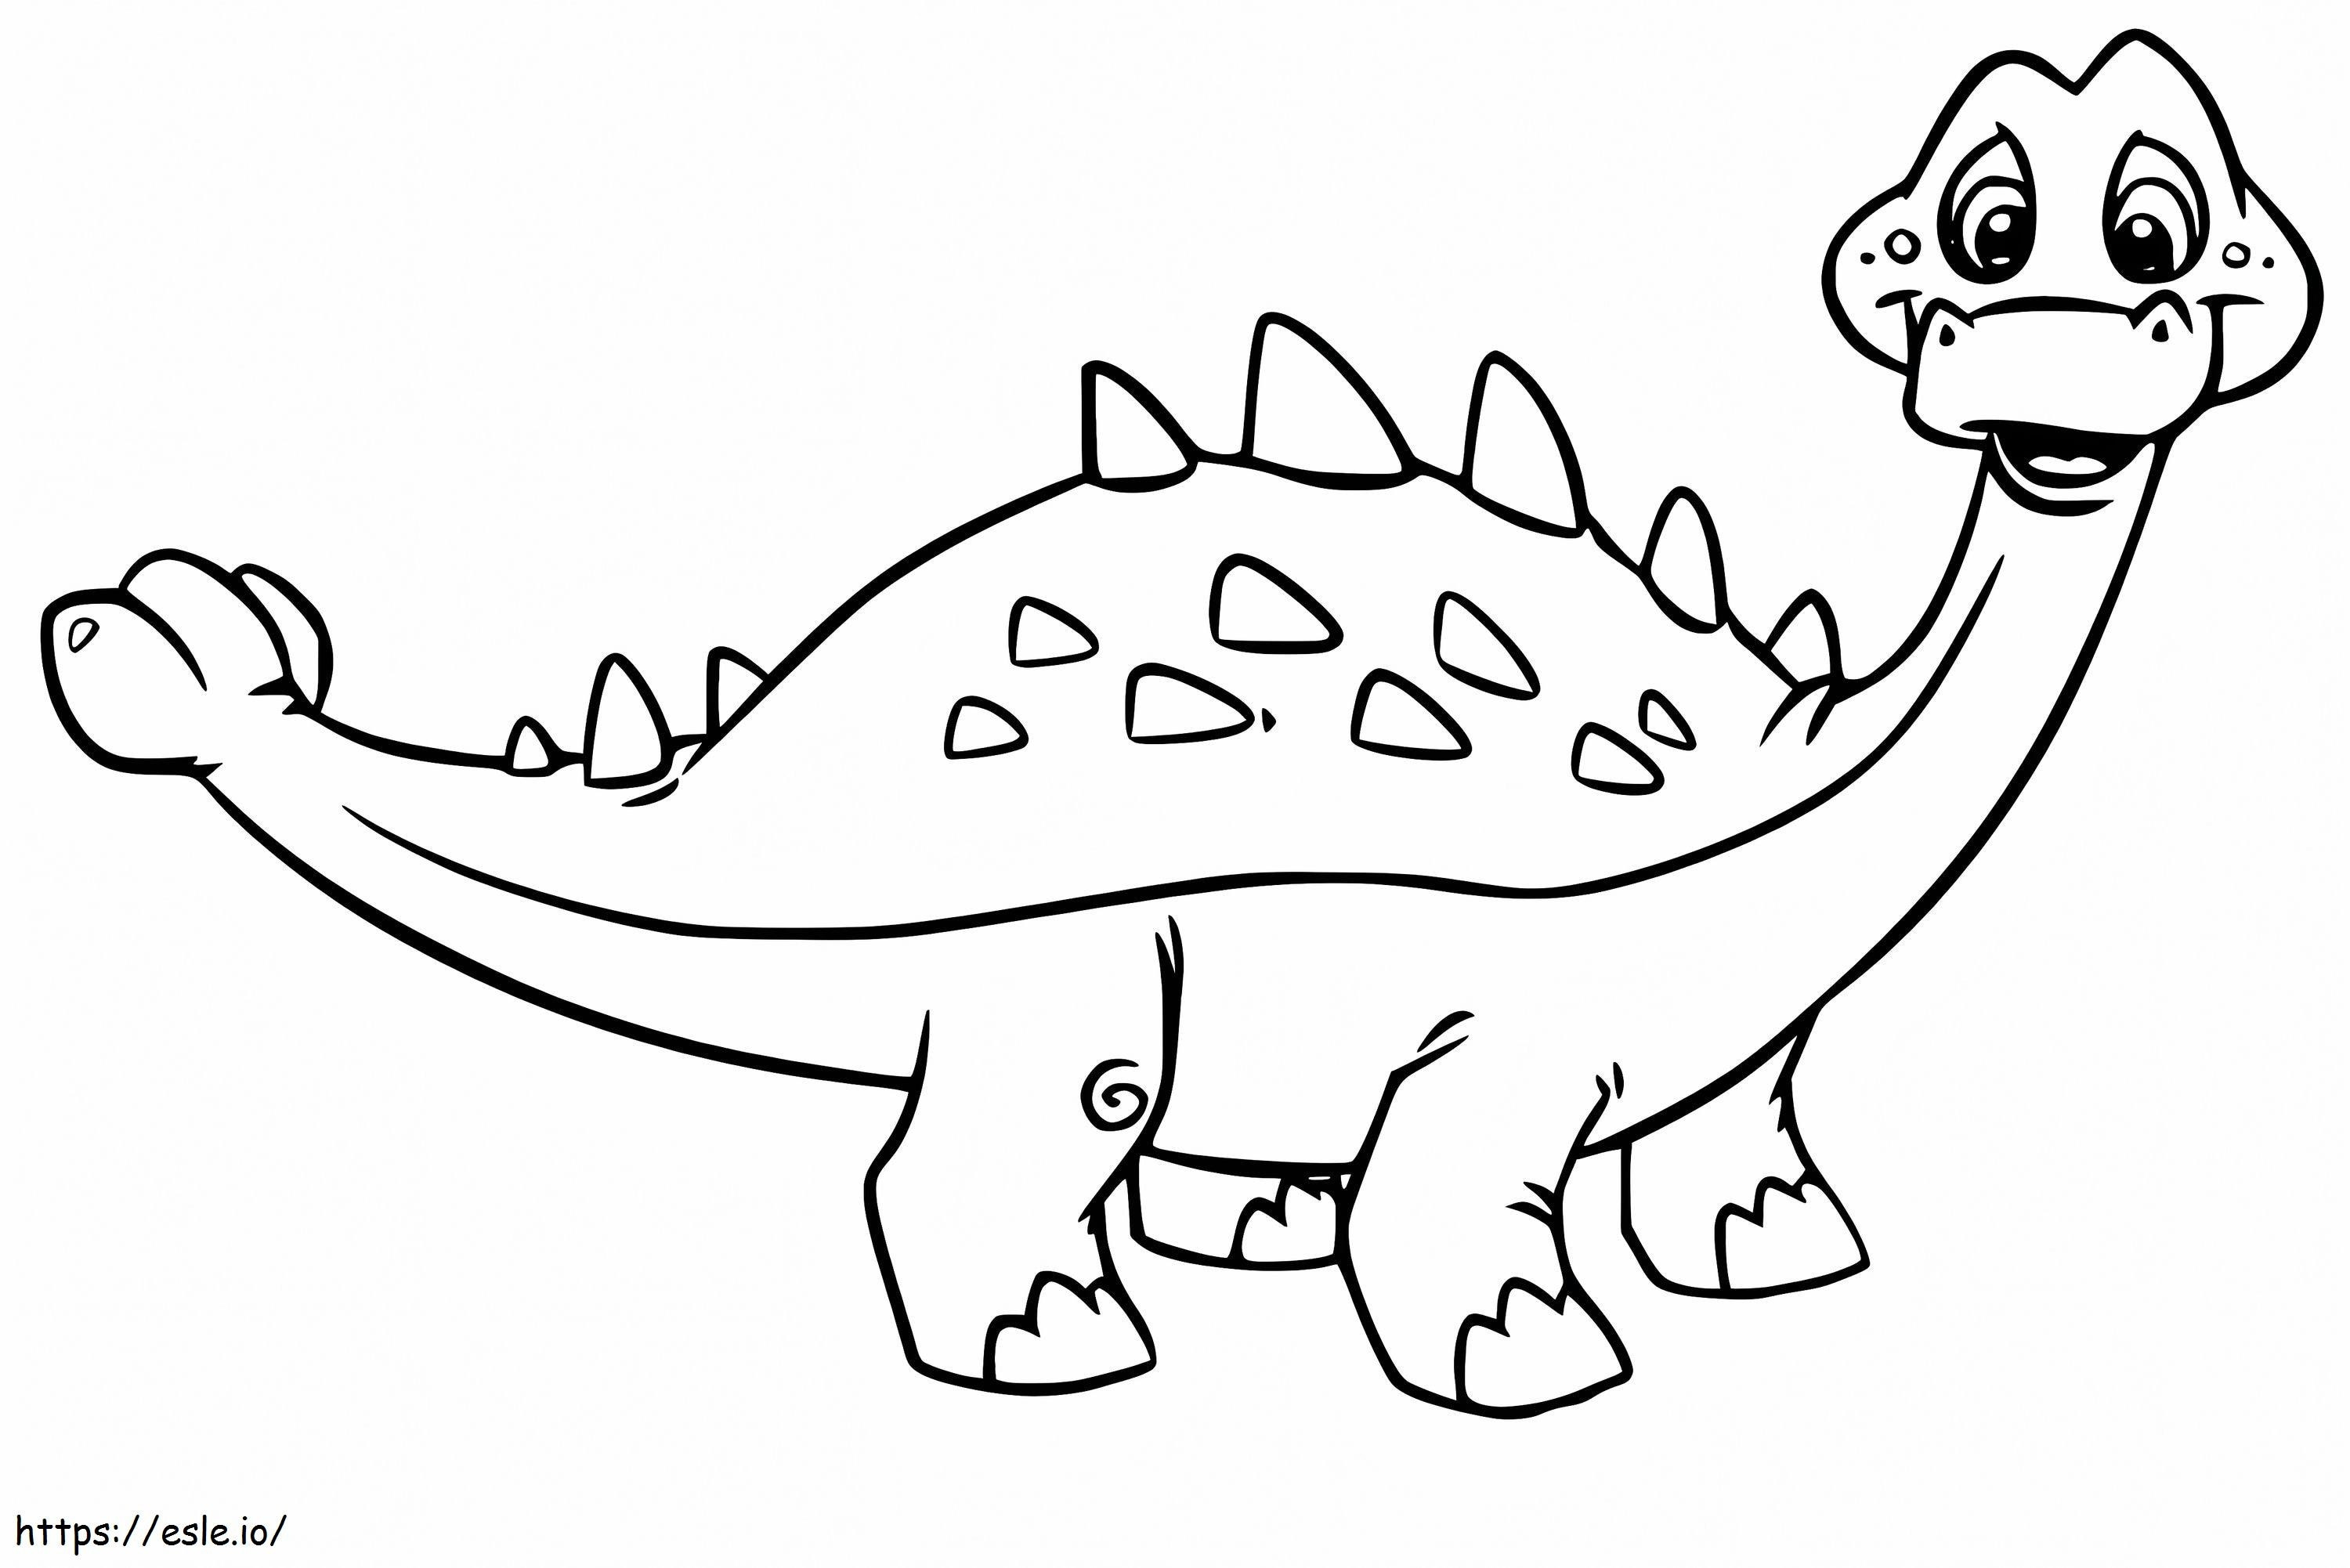 Coloriage Ankylosaure de dessin animé à imprimer dessin